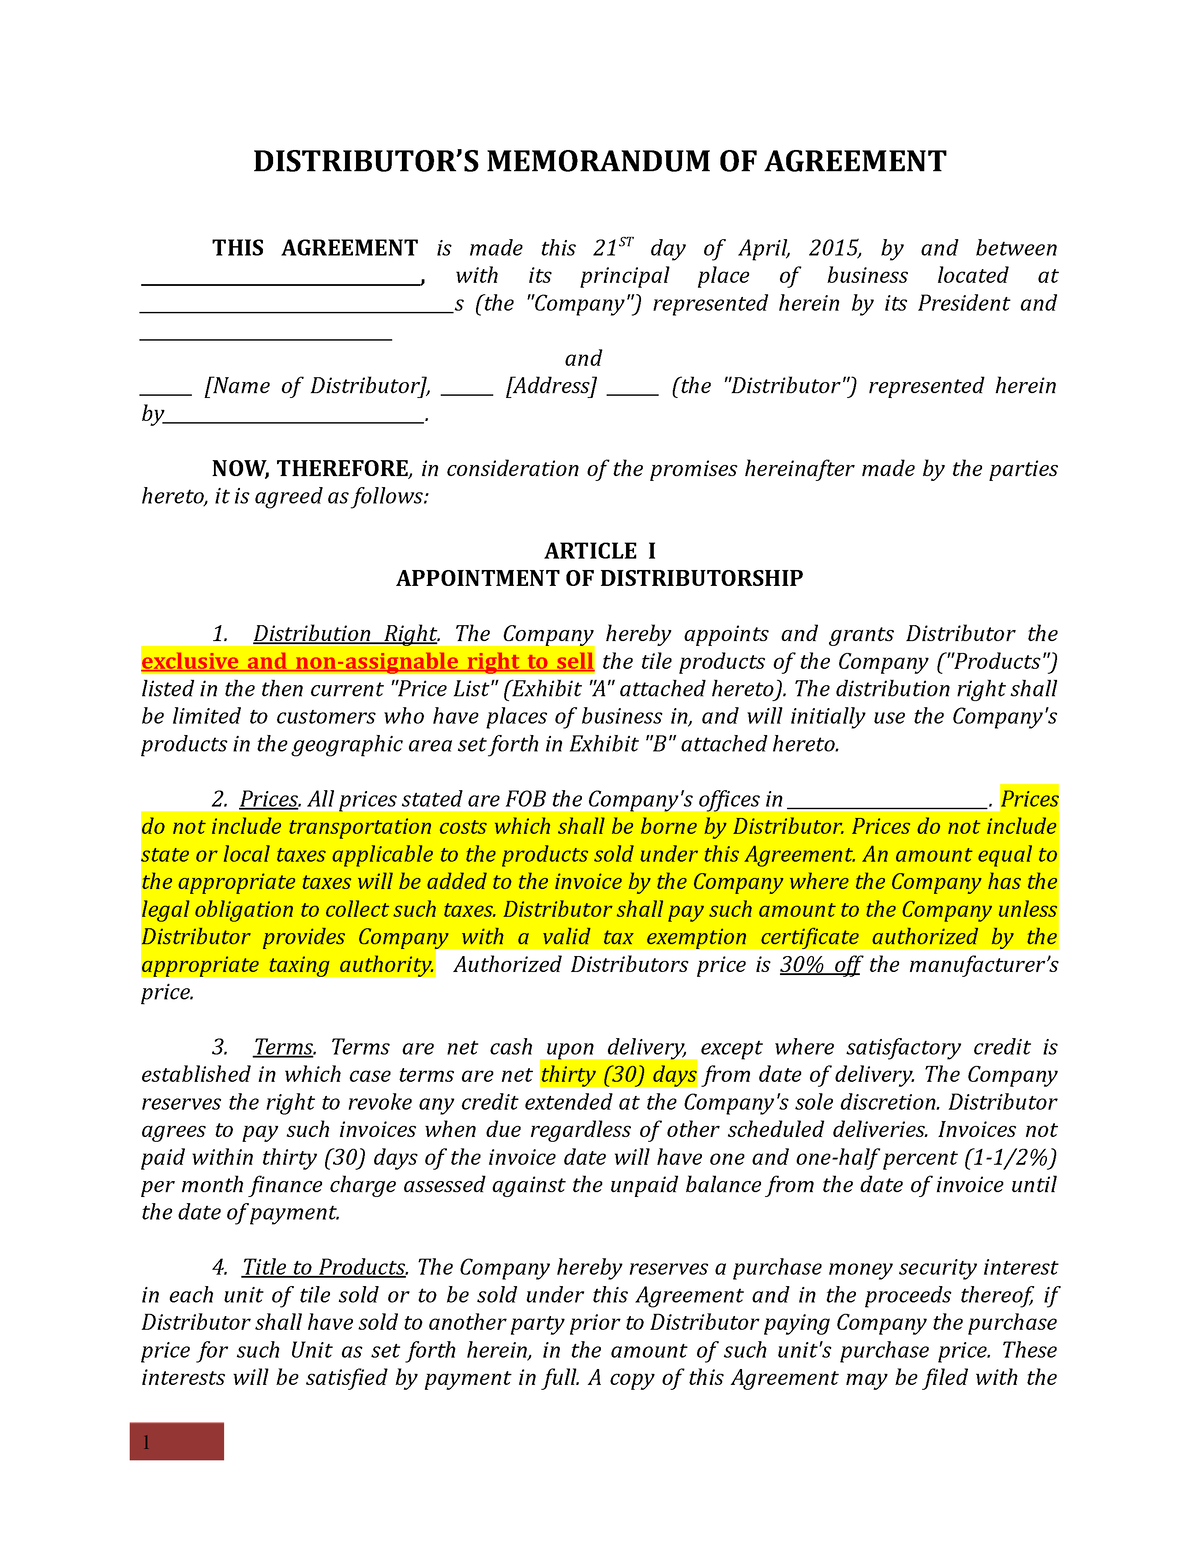 distributor-agreement-sample-distributor-s-memorandum-of-agreement